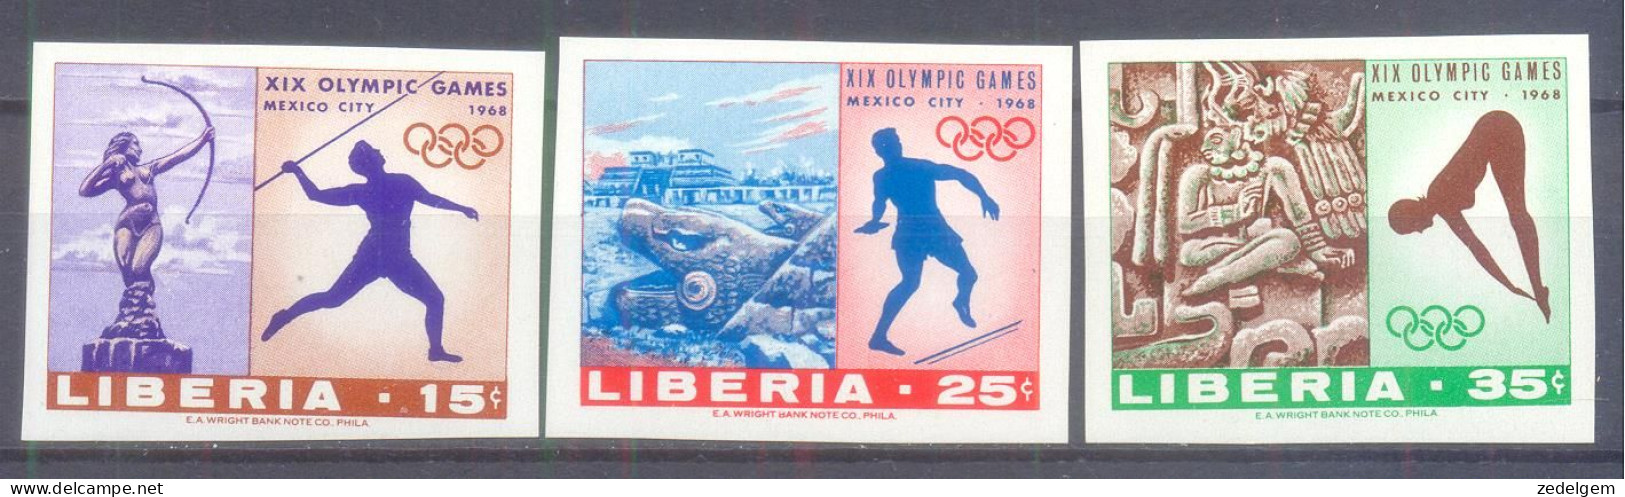 LIBERIA   (OLS128) XC - Verano 1968: México